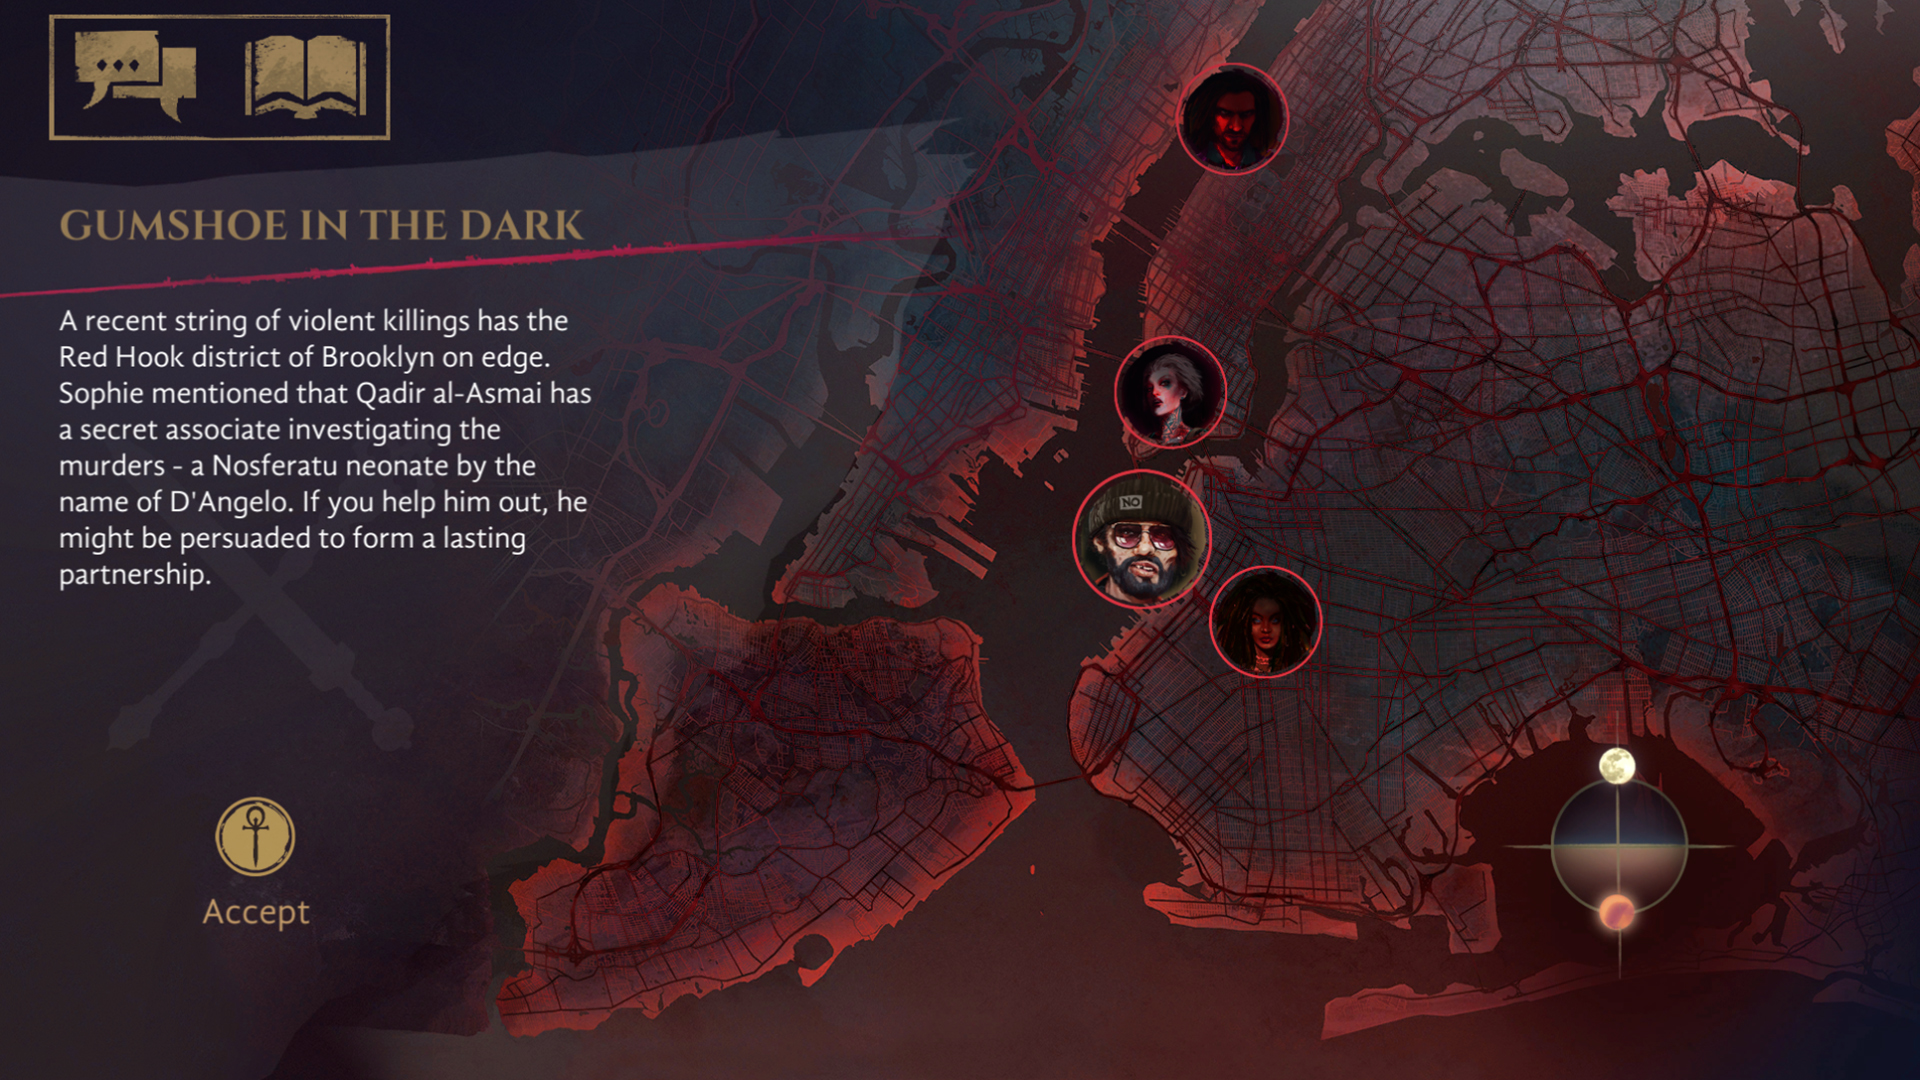 Vampire: The Masquerade—Coteries of New York announced